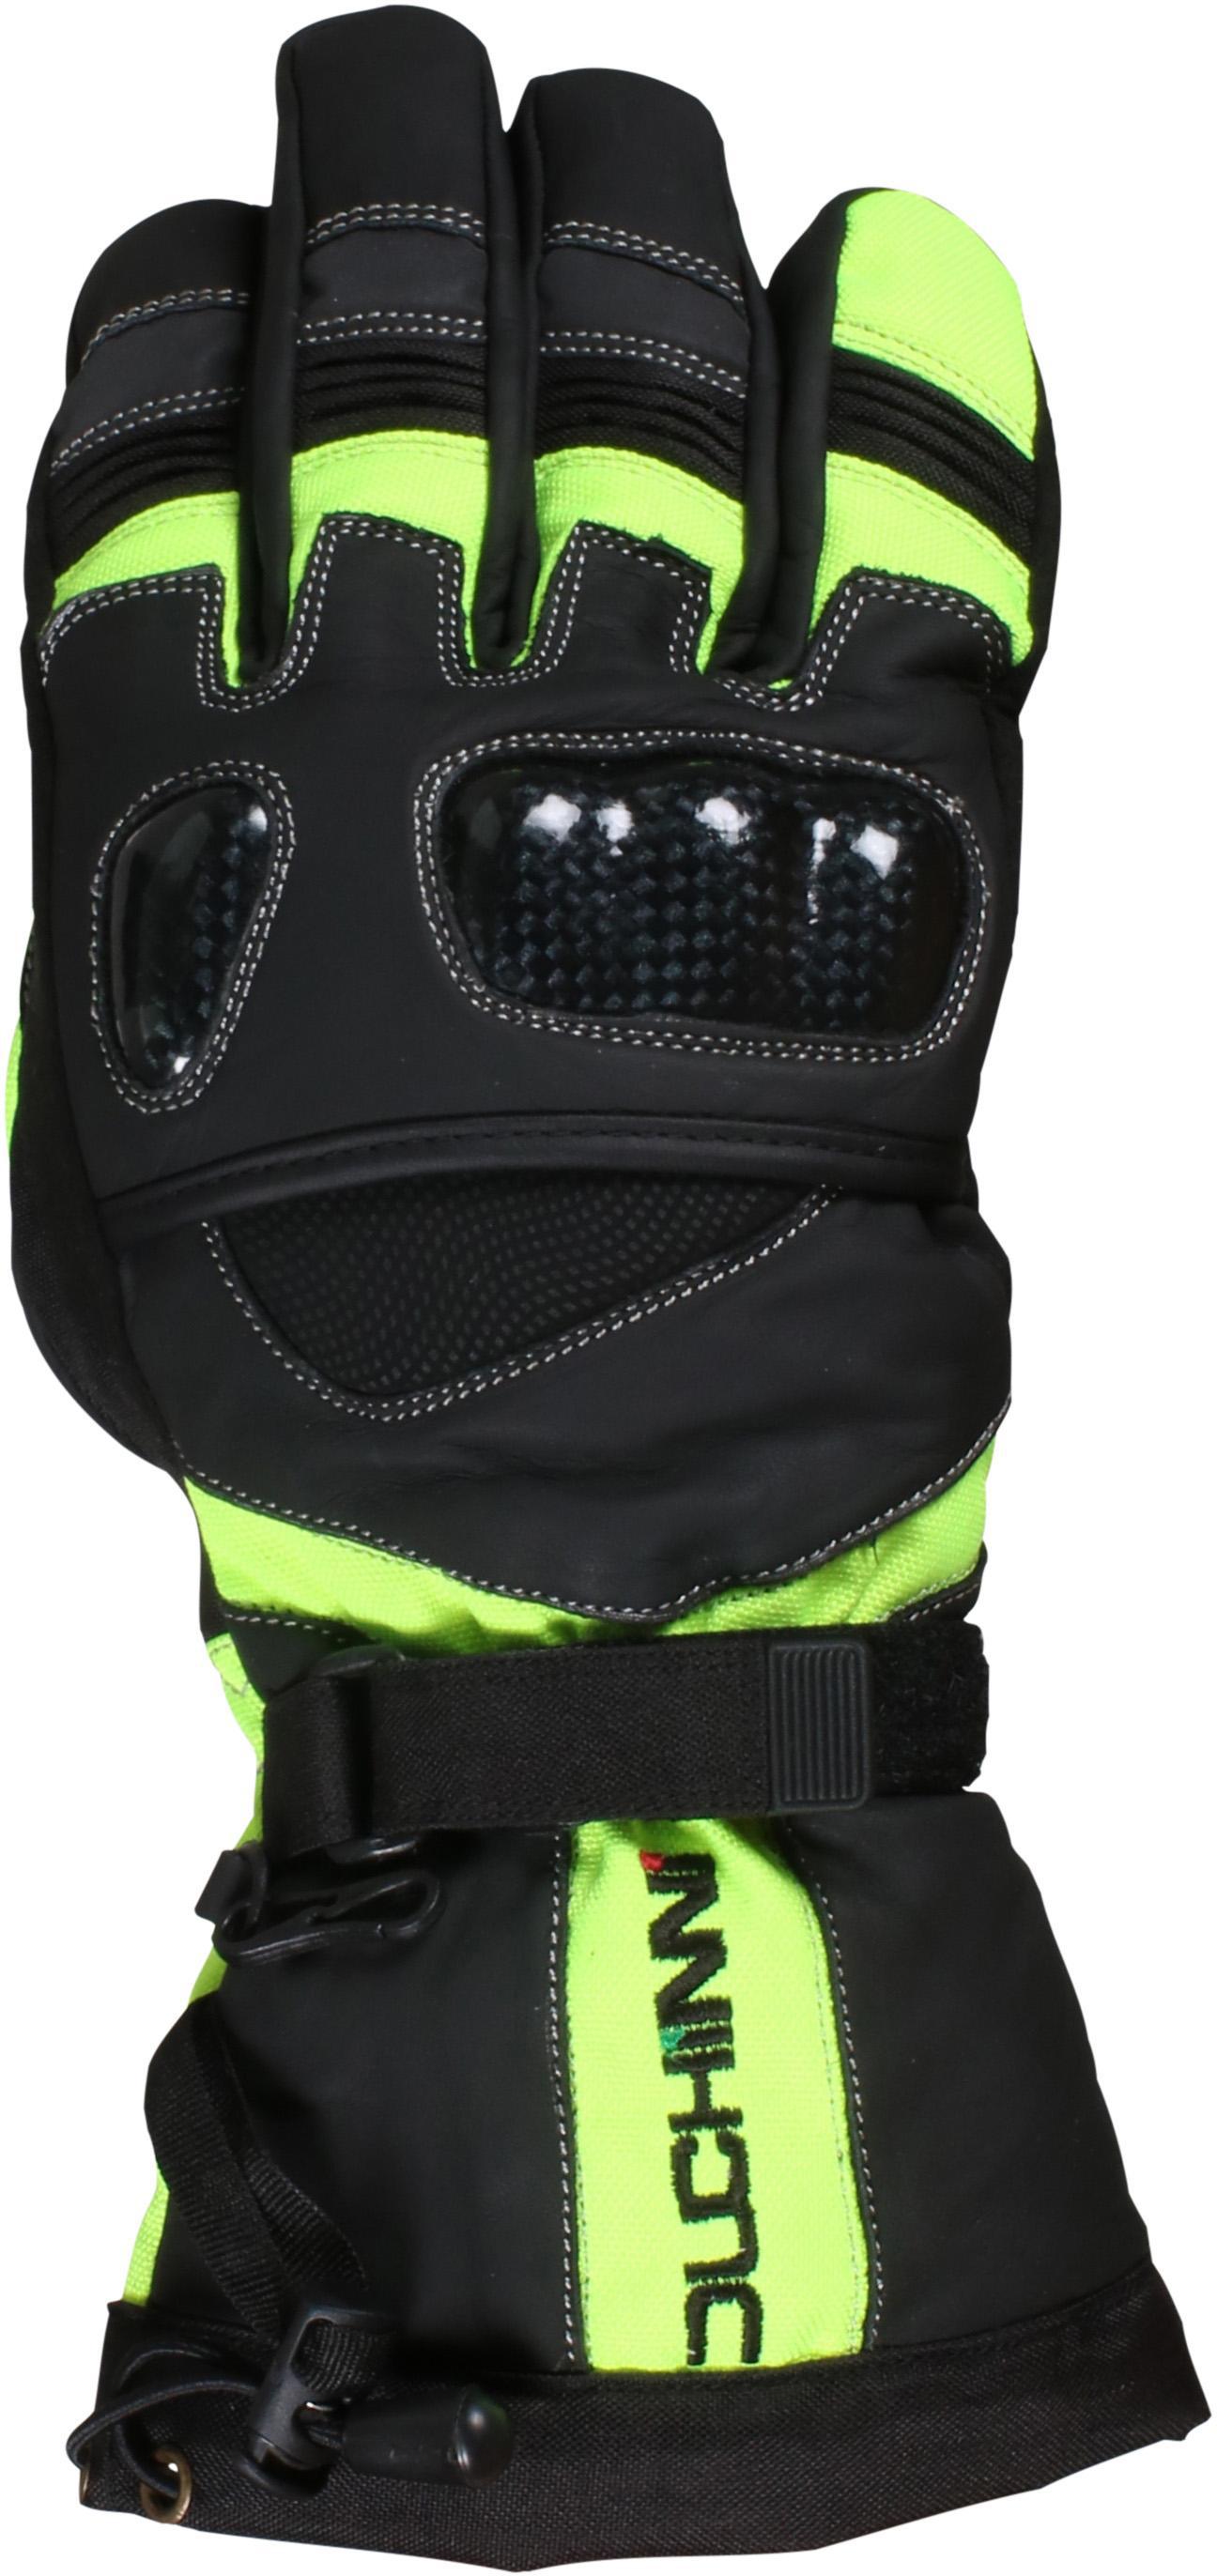 Duchinni Yukon Motorcycle Gloves - Black And Neon, L